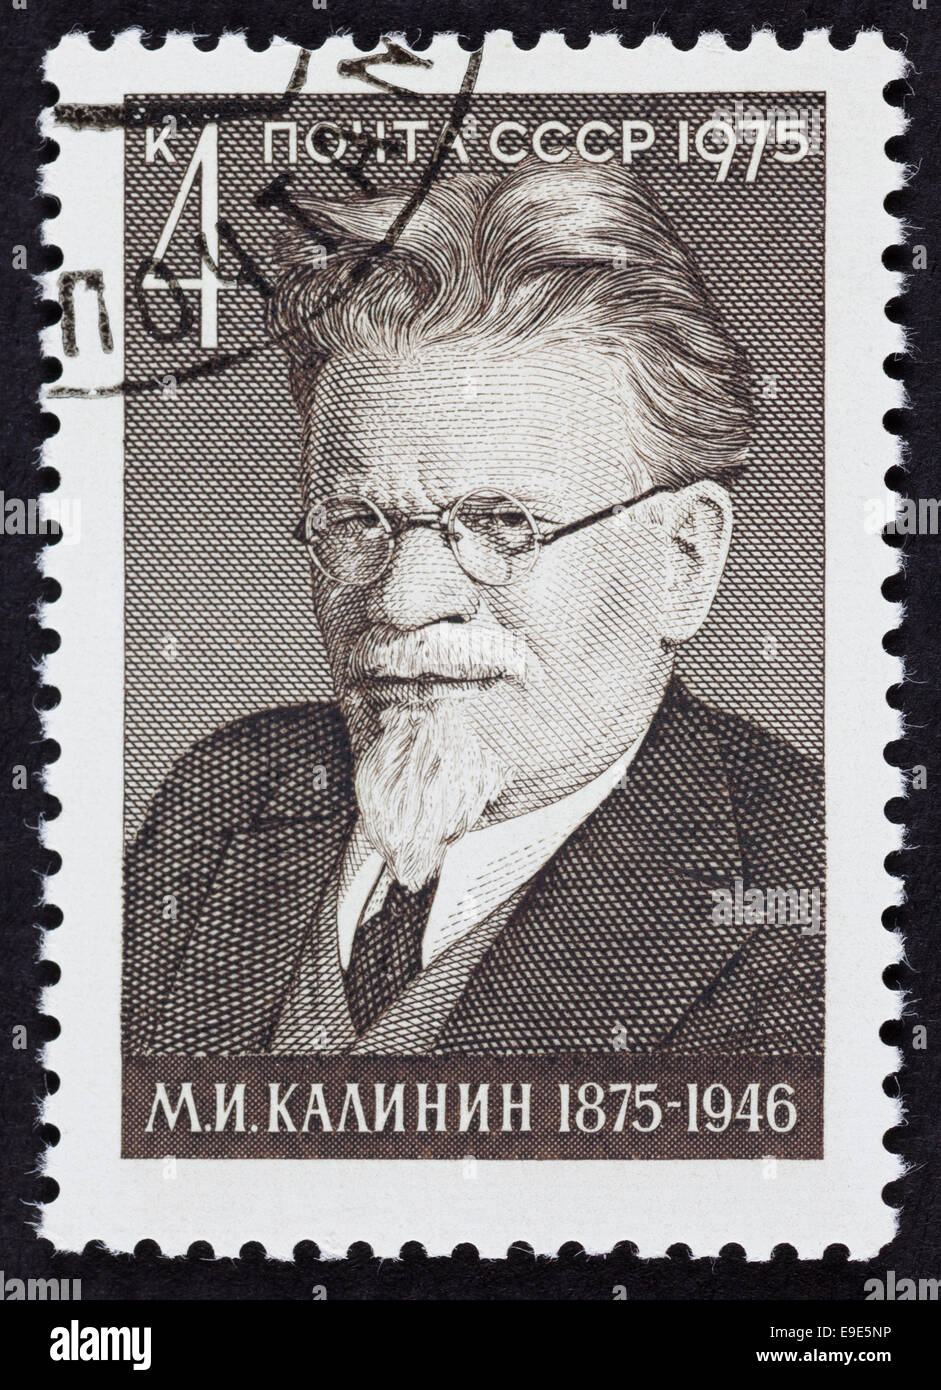 USSR postage stamp Mikhail Ivanovich Kalinin. 1975 year. Black background. Stock Photo